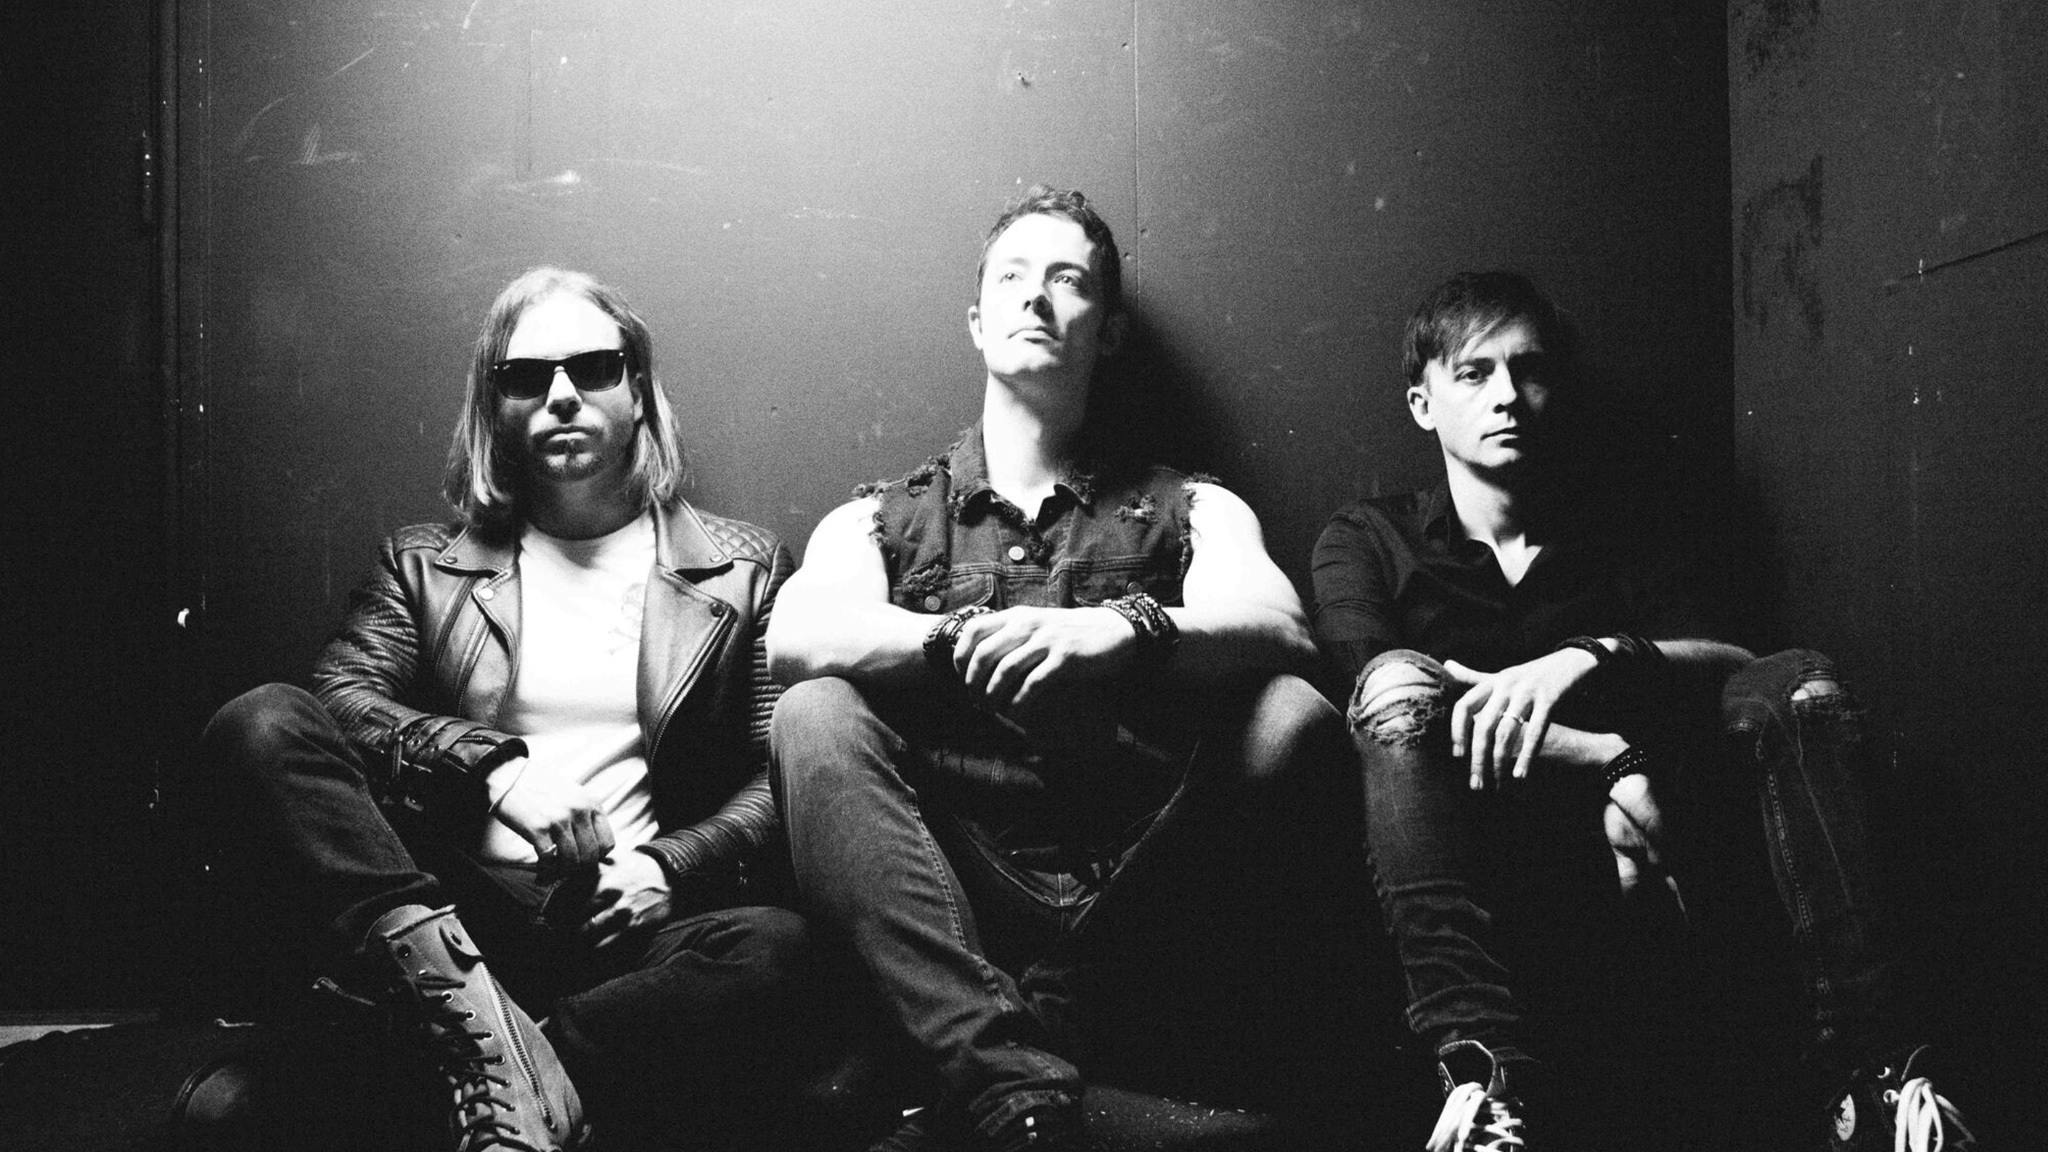 Gunship unleash new single featuring Gavin Rossdale and Carpenter Brut